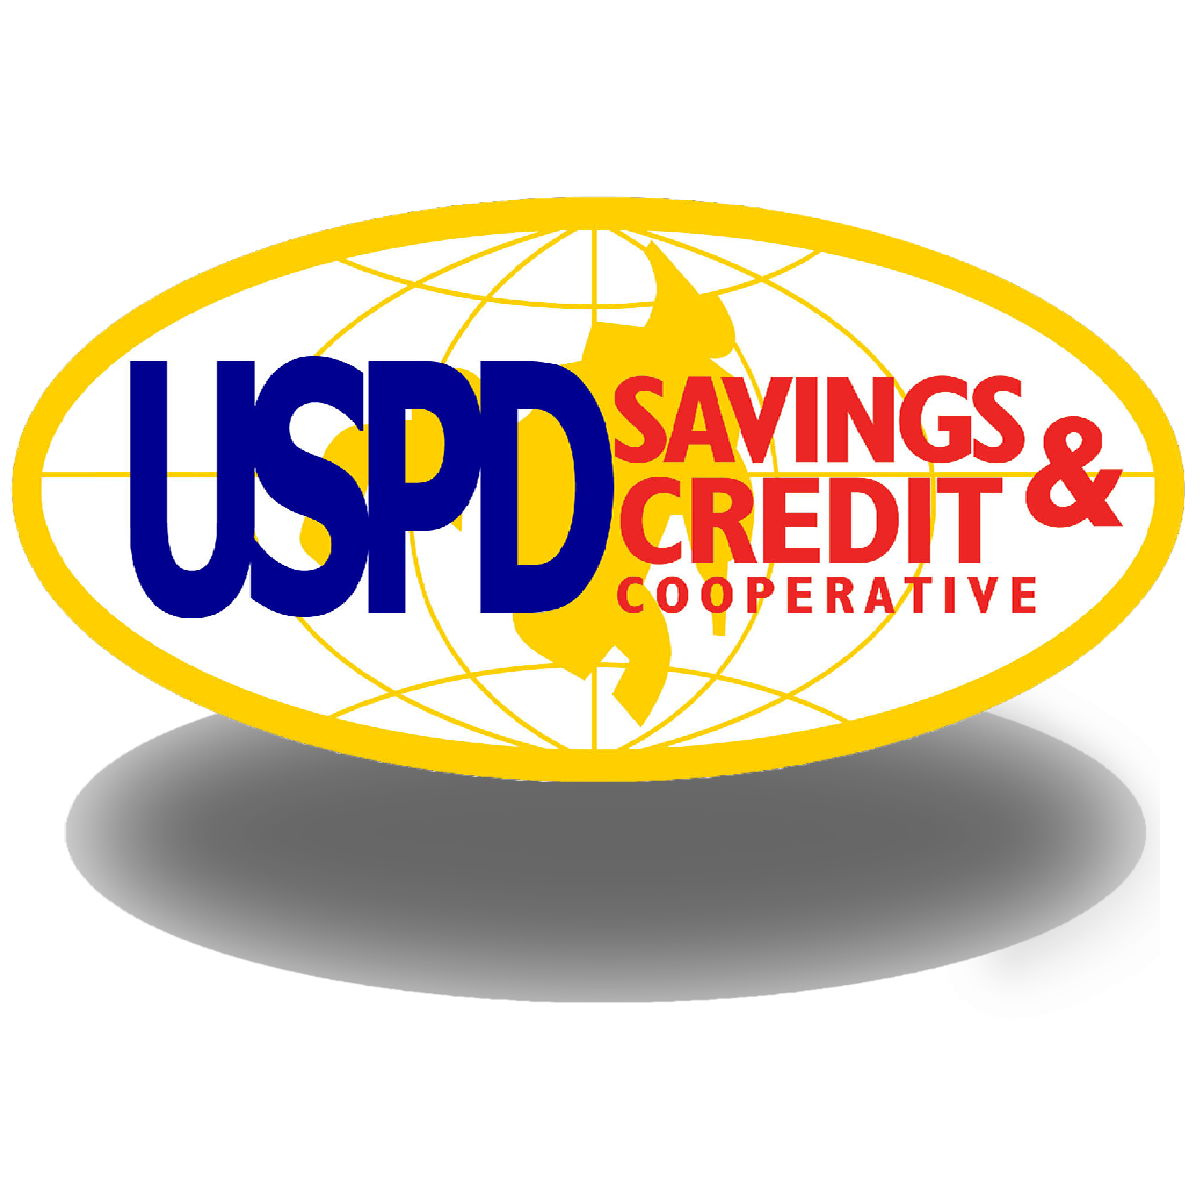 USPD Savings and Credit Cooperative 1 PROFILE